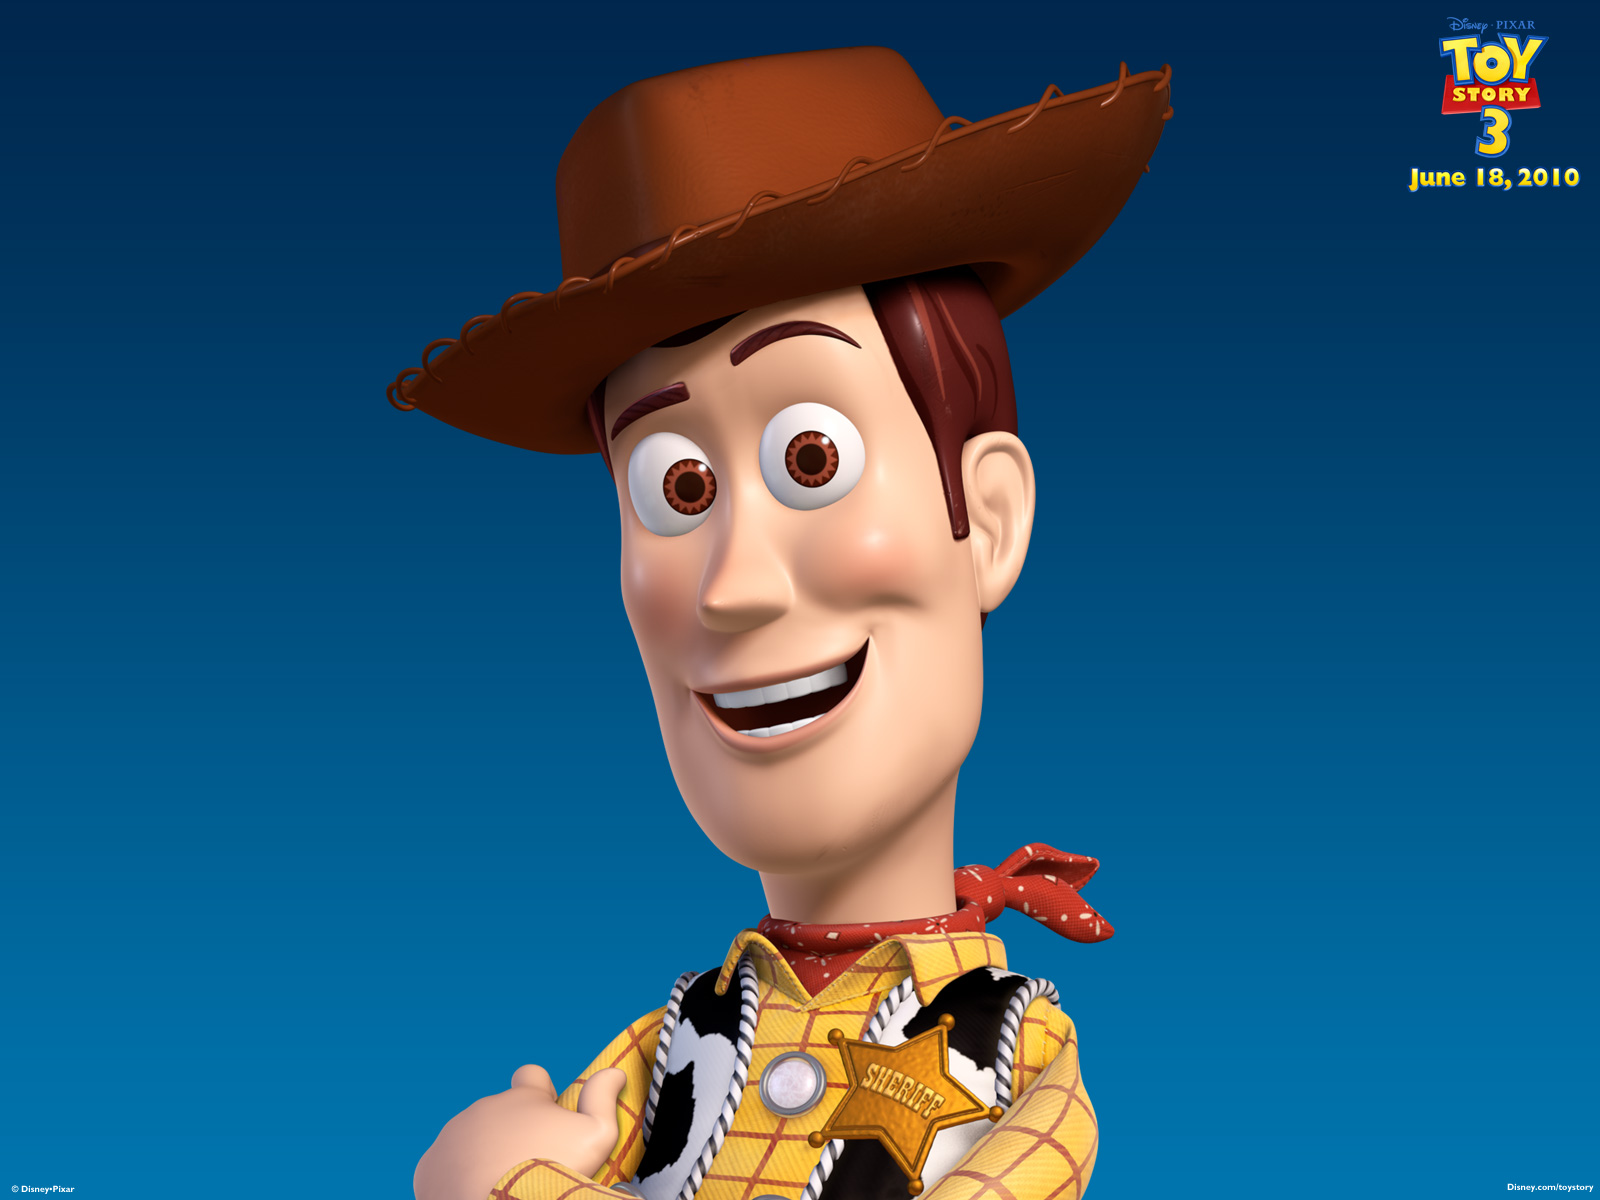 "Toy Story 3" desktop wallpaper number 2 (1600 x 1200 pixels)